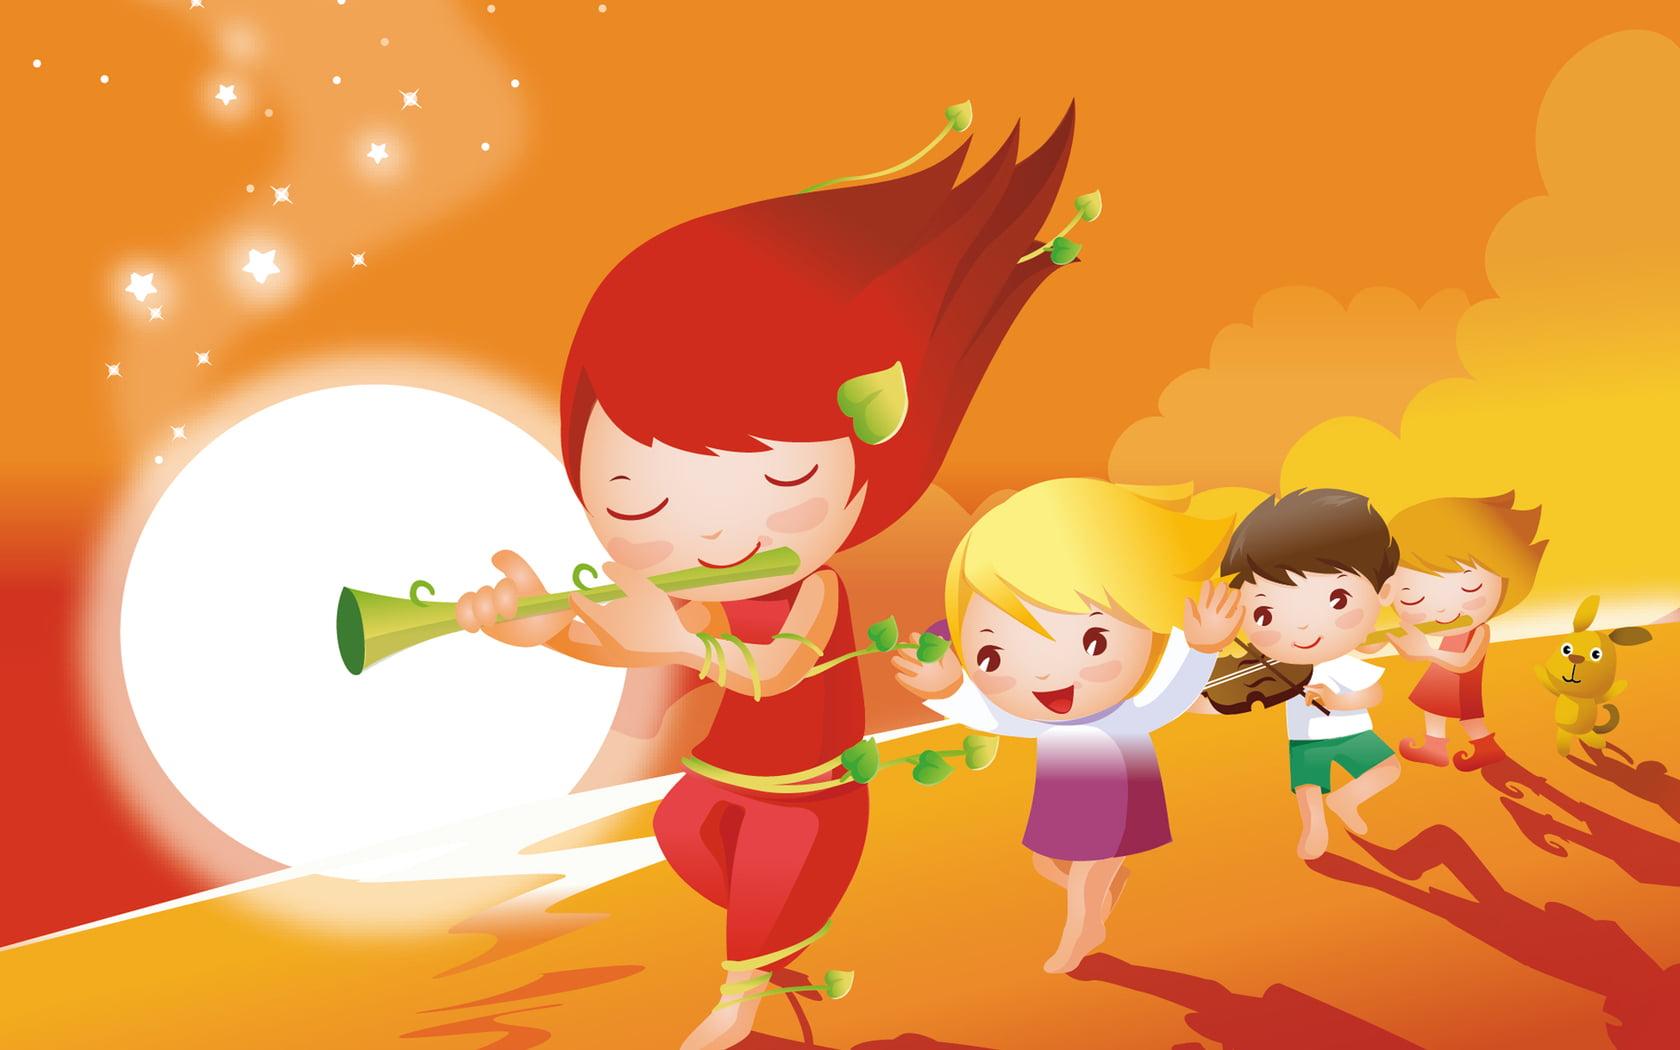 HD wallpaper: Cartoon Kids Music, illustration of four children